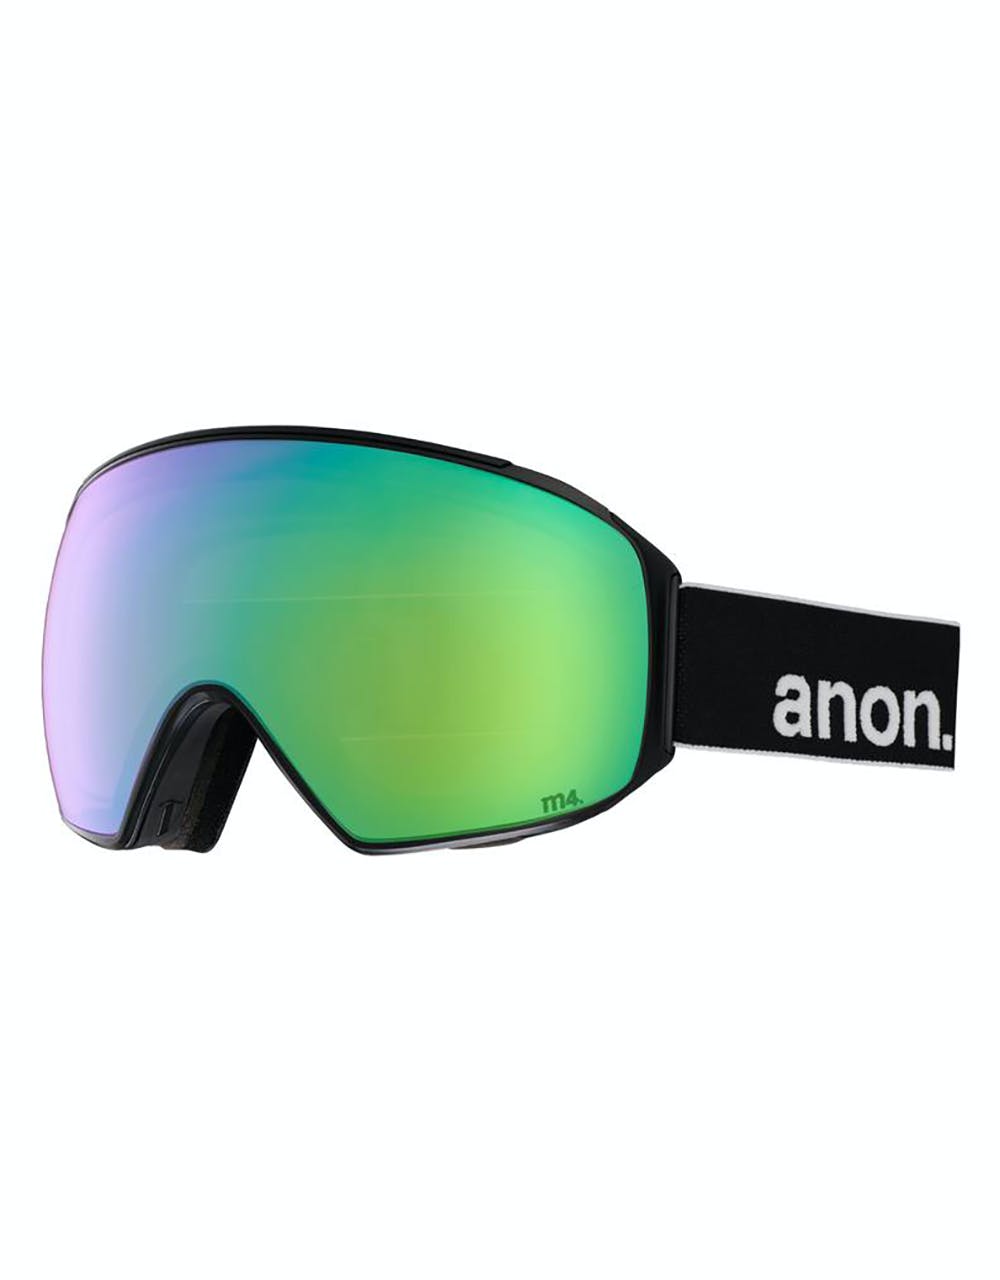 Anon M4 Toric MFI® Snowboard Goggles - Black/Sonar Green